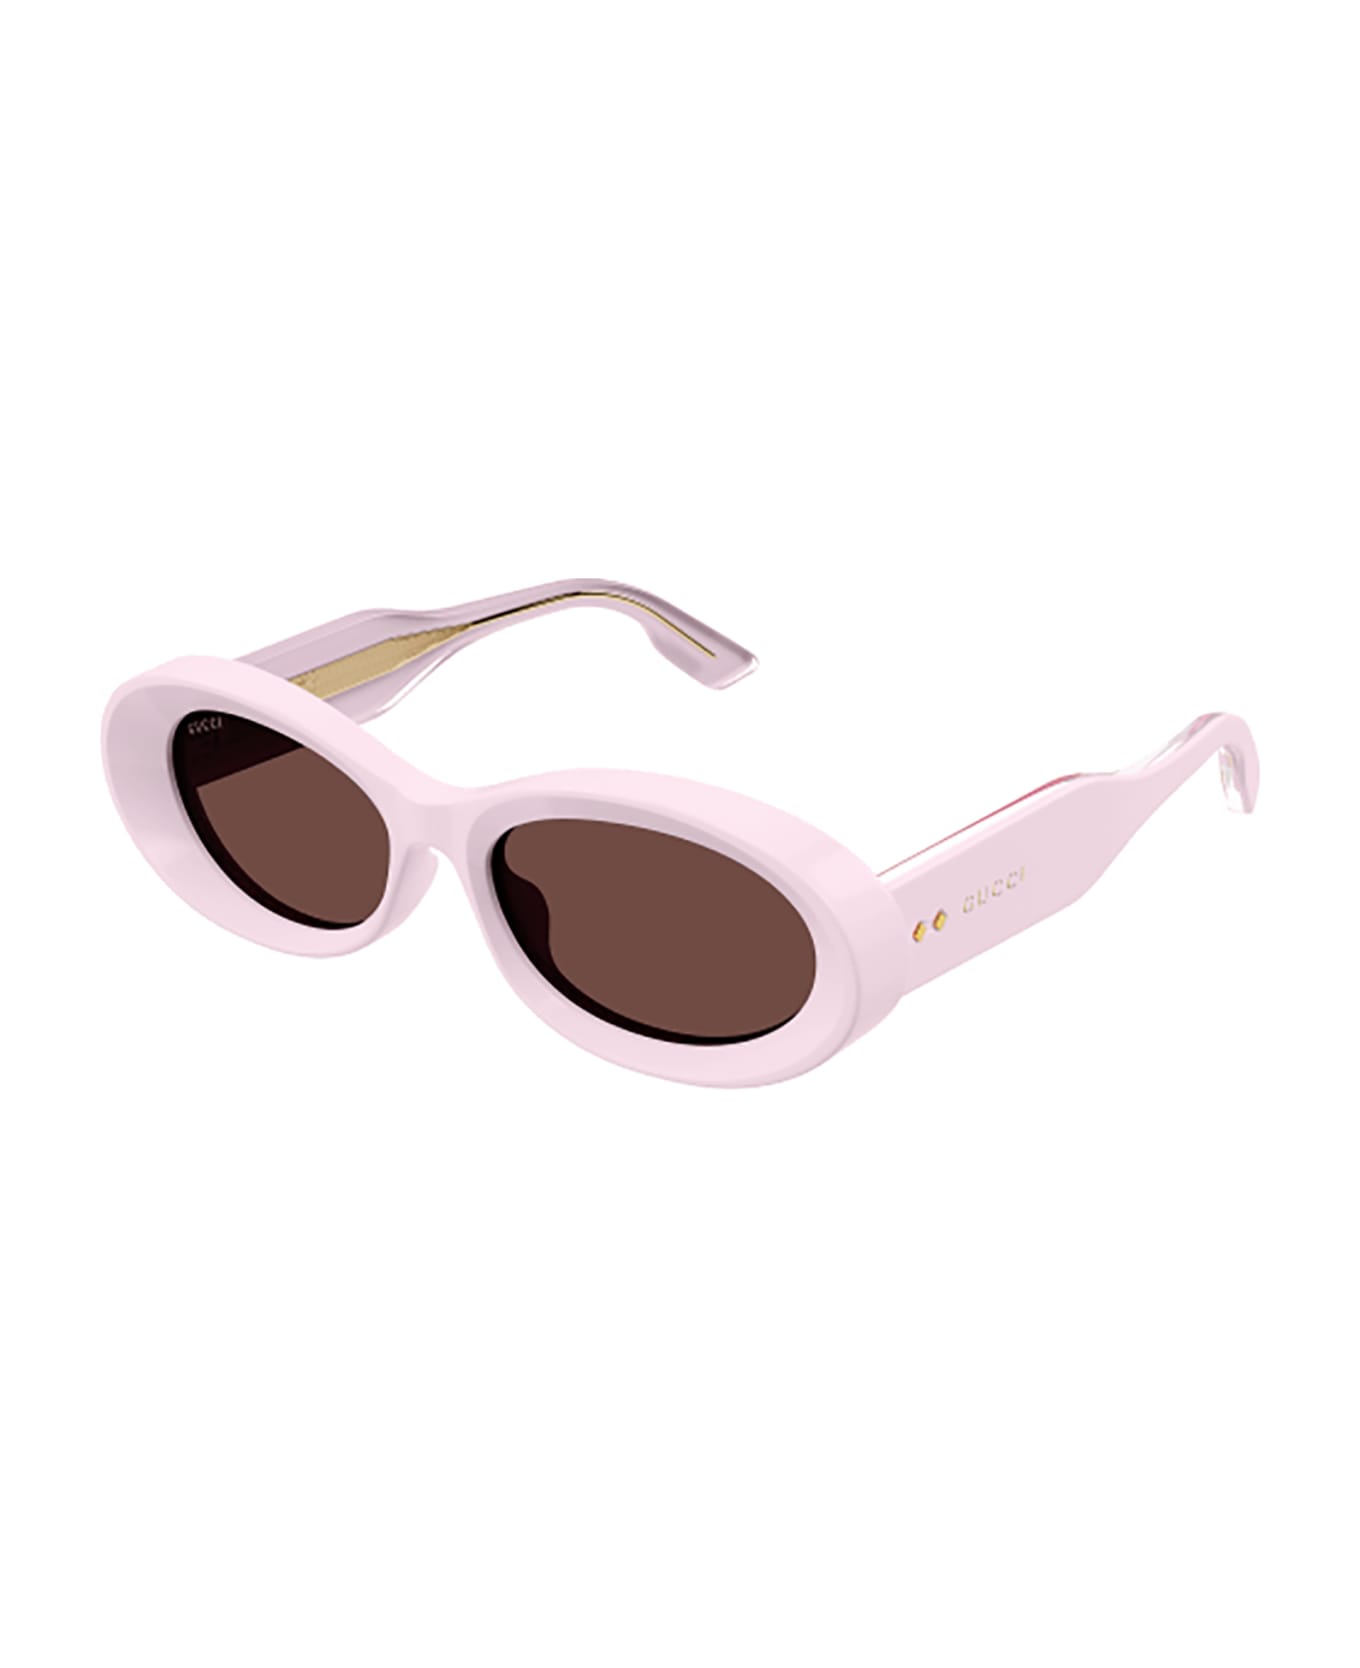 Gucci Eyewear GG1527S Sunglasses - Pink Pink Brown サングラス